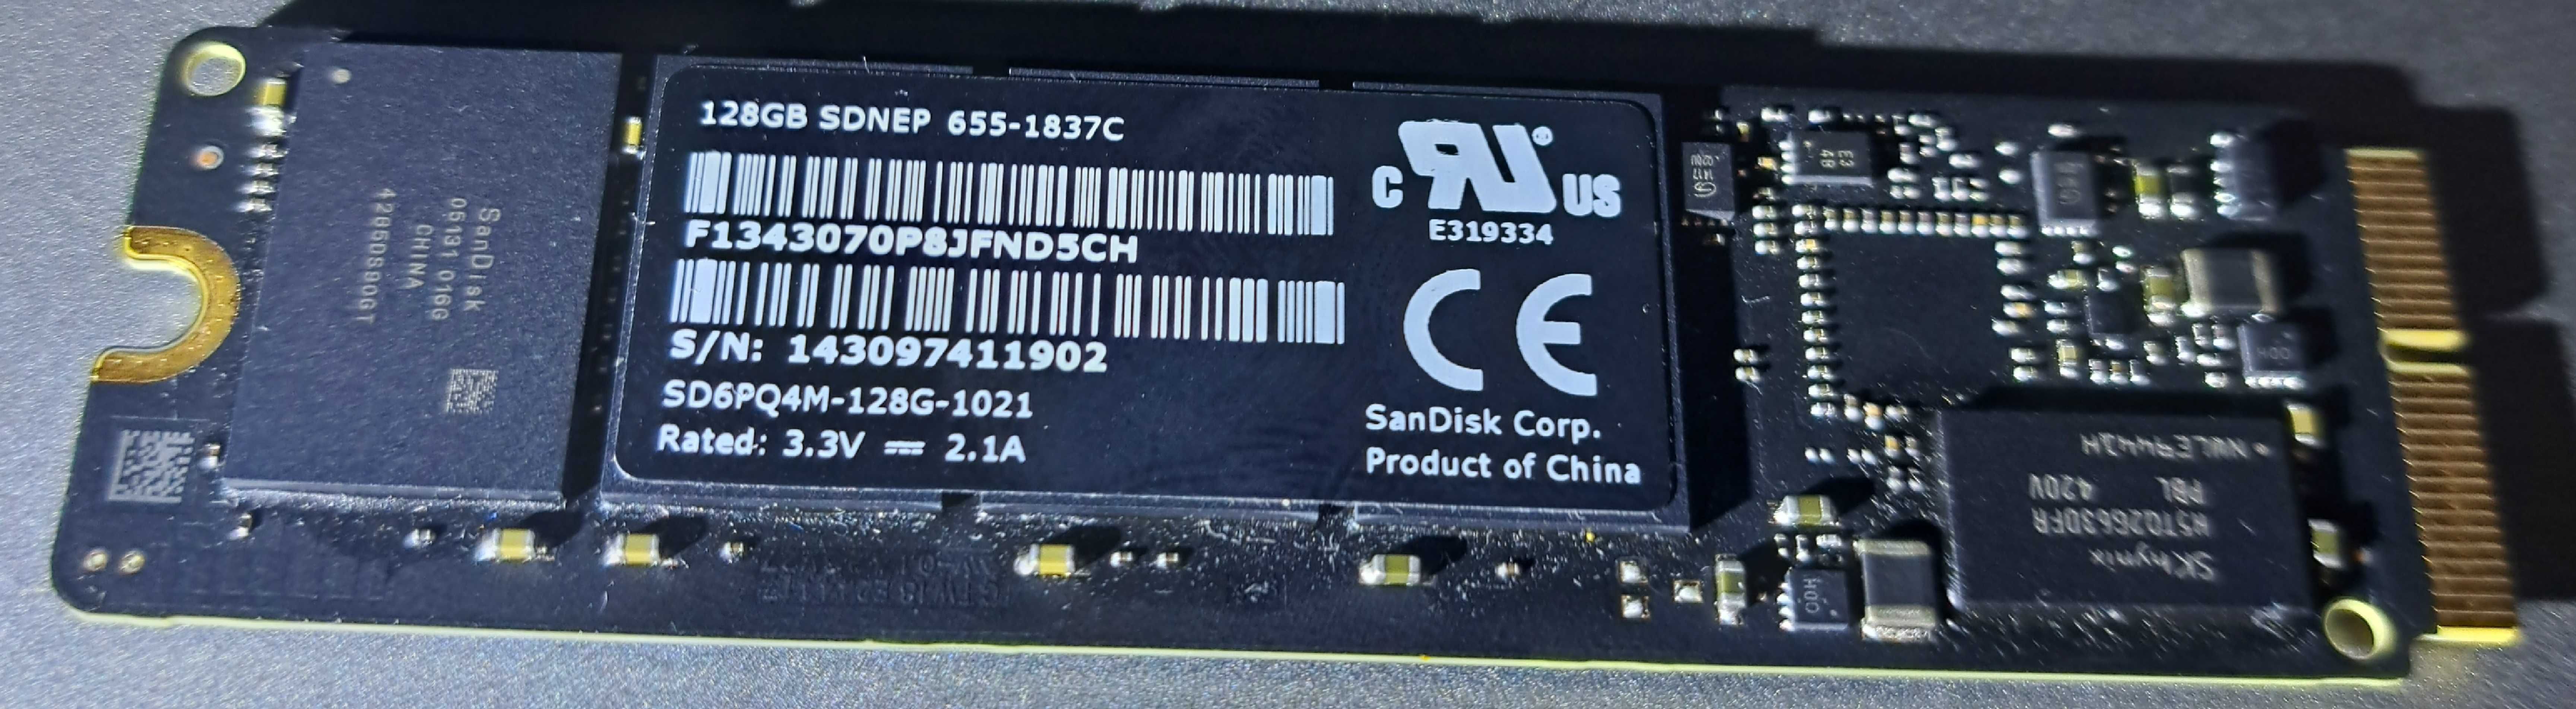 Dysk SDD SanDisk M.2 PCIE 128GB